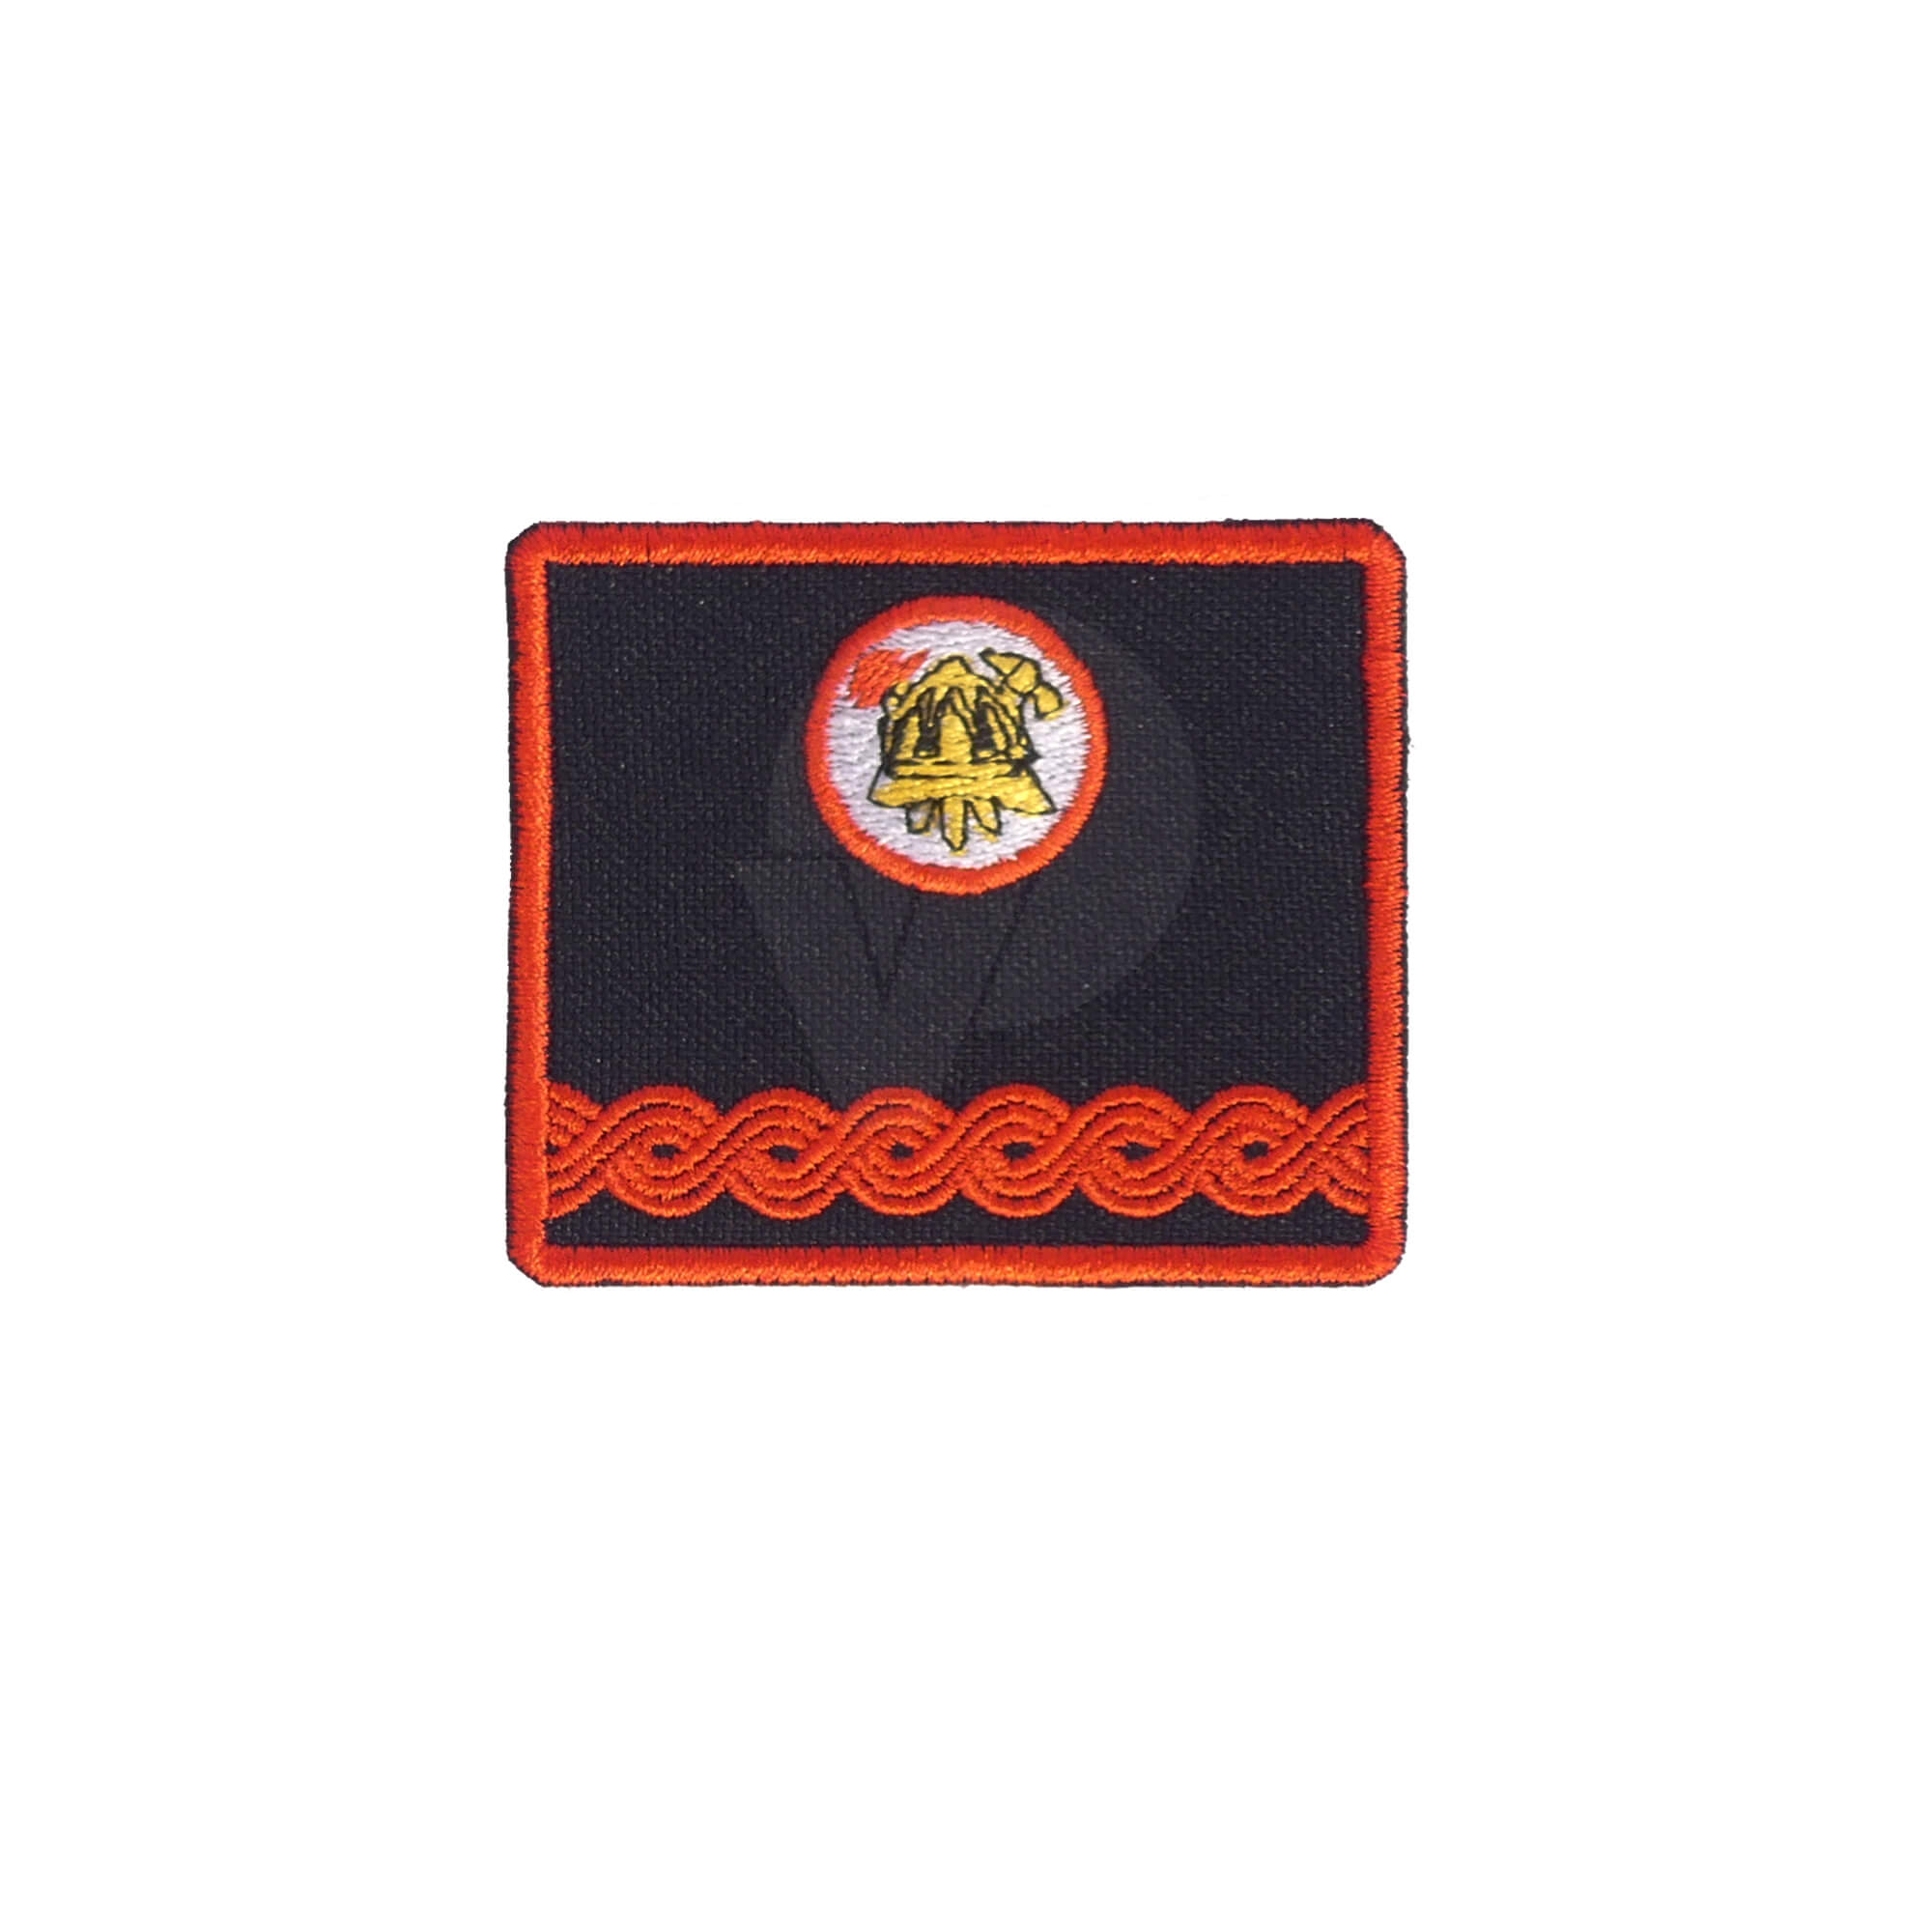 Firefighter Emblem for Work Suit, Member of the Board